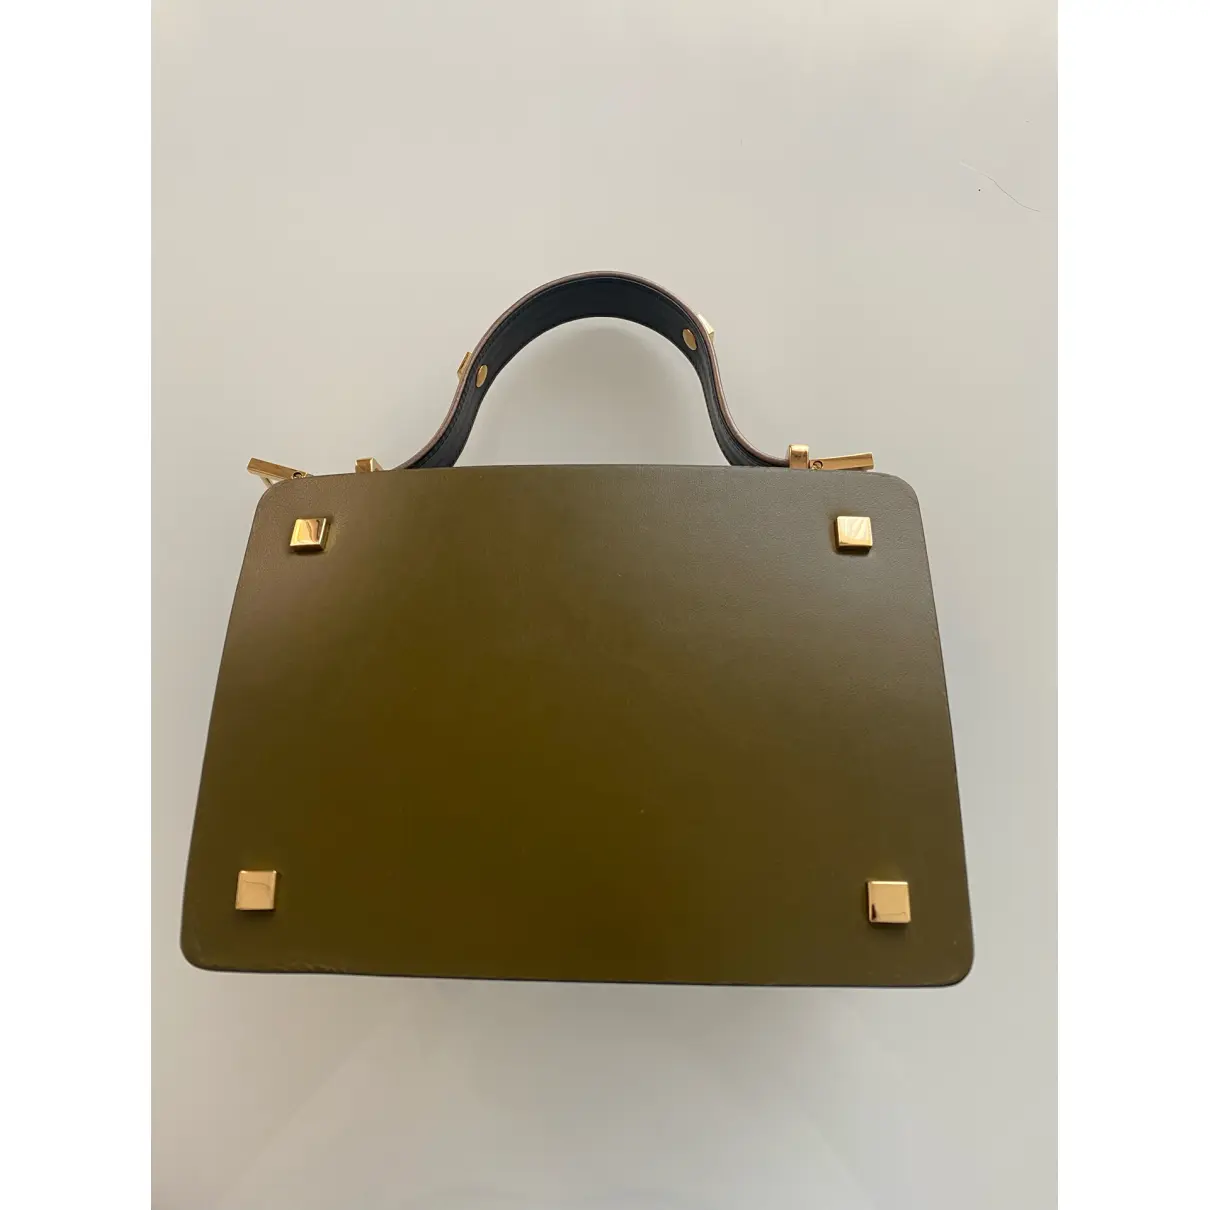 Buy Giancarlo Petriglia Leather handbag online